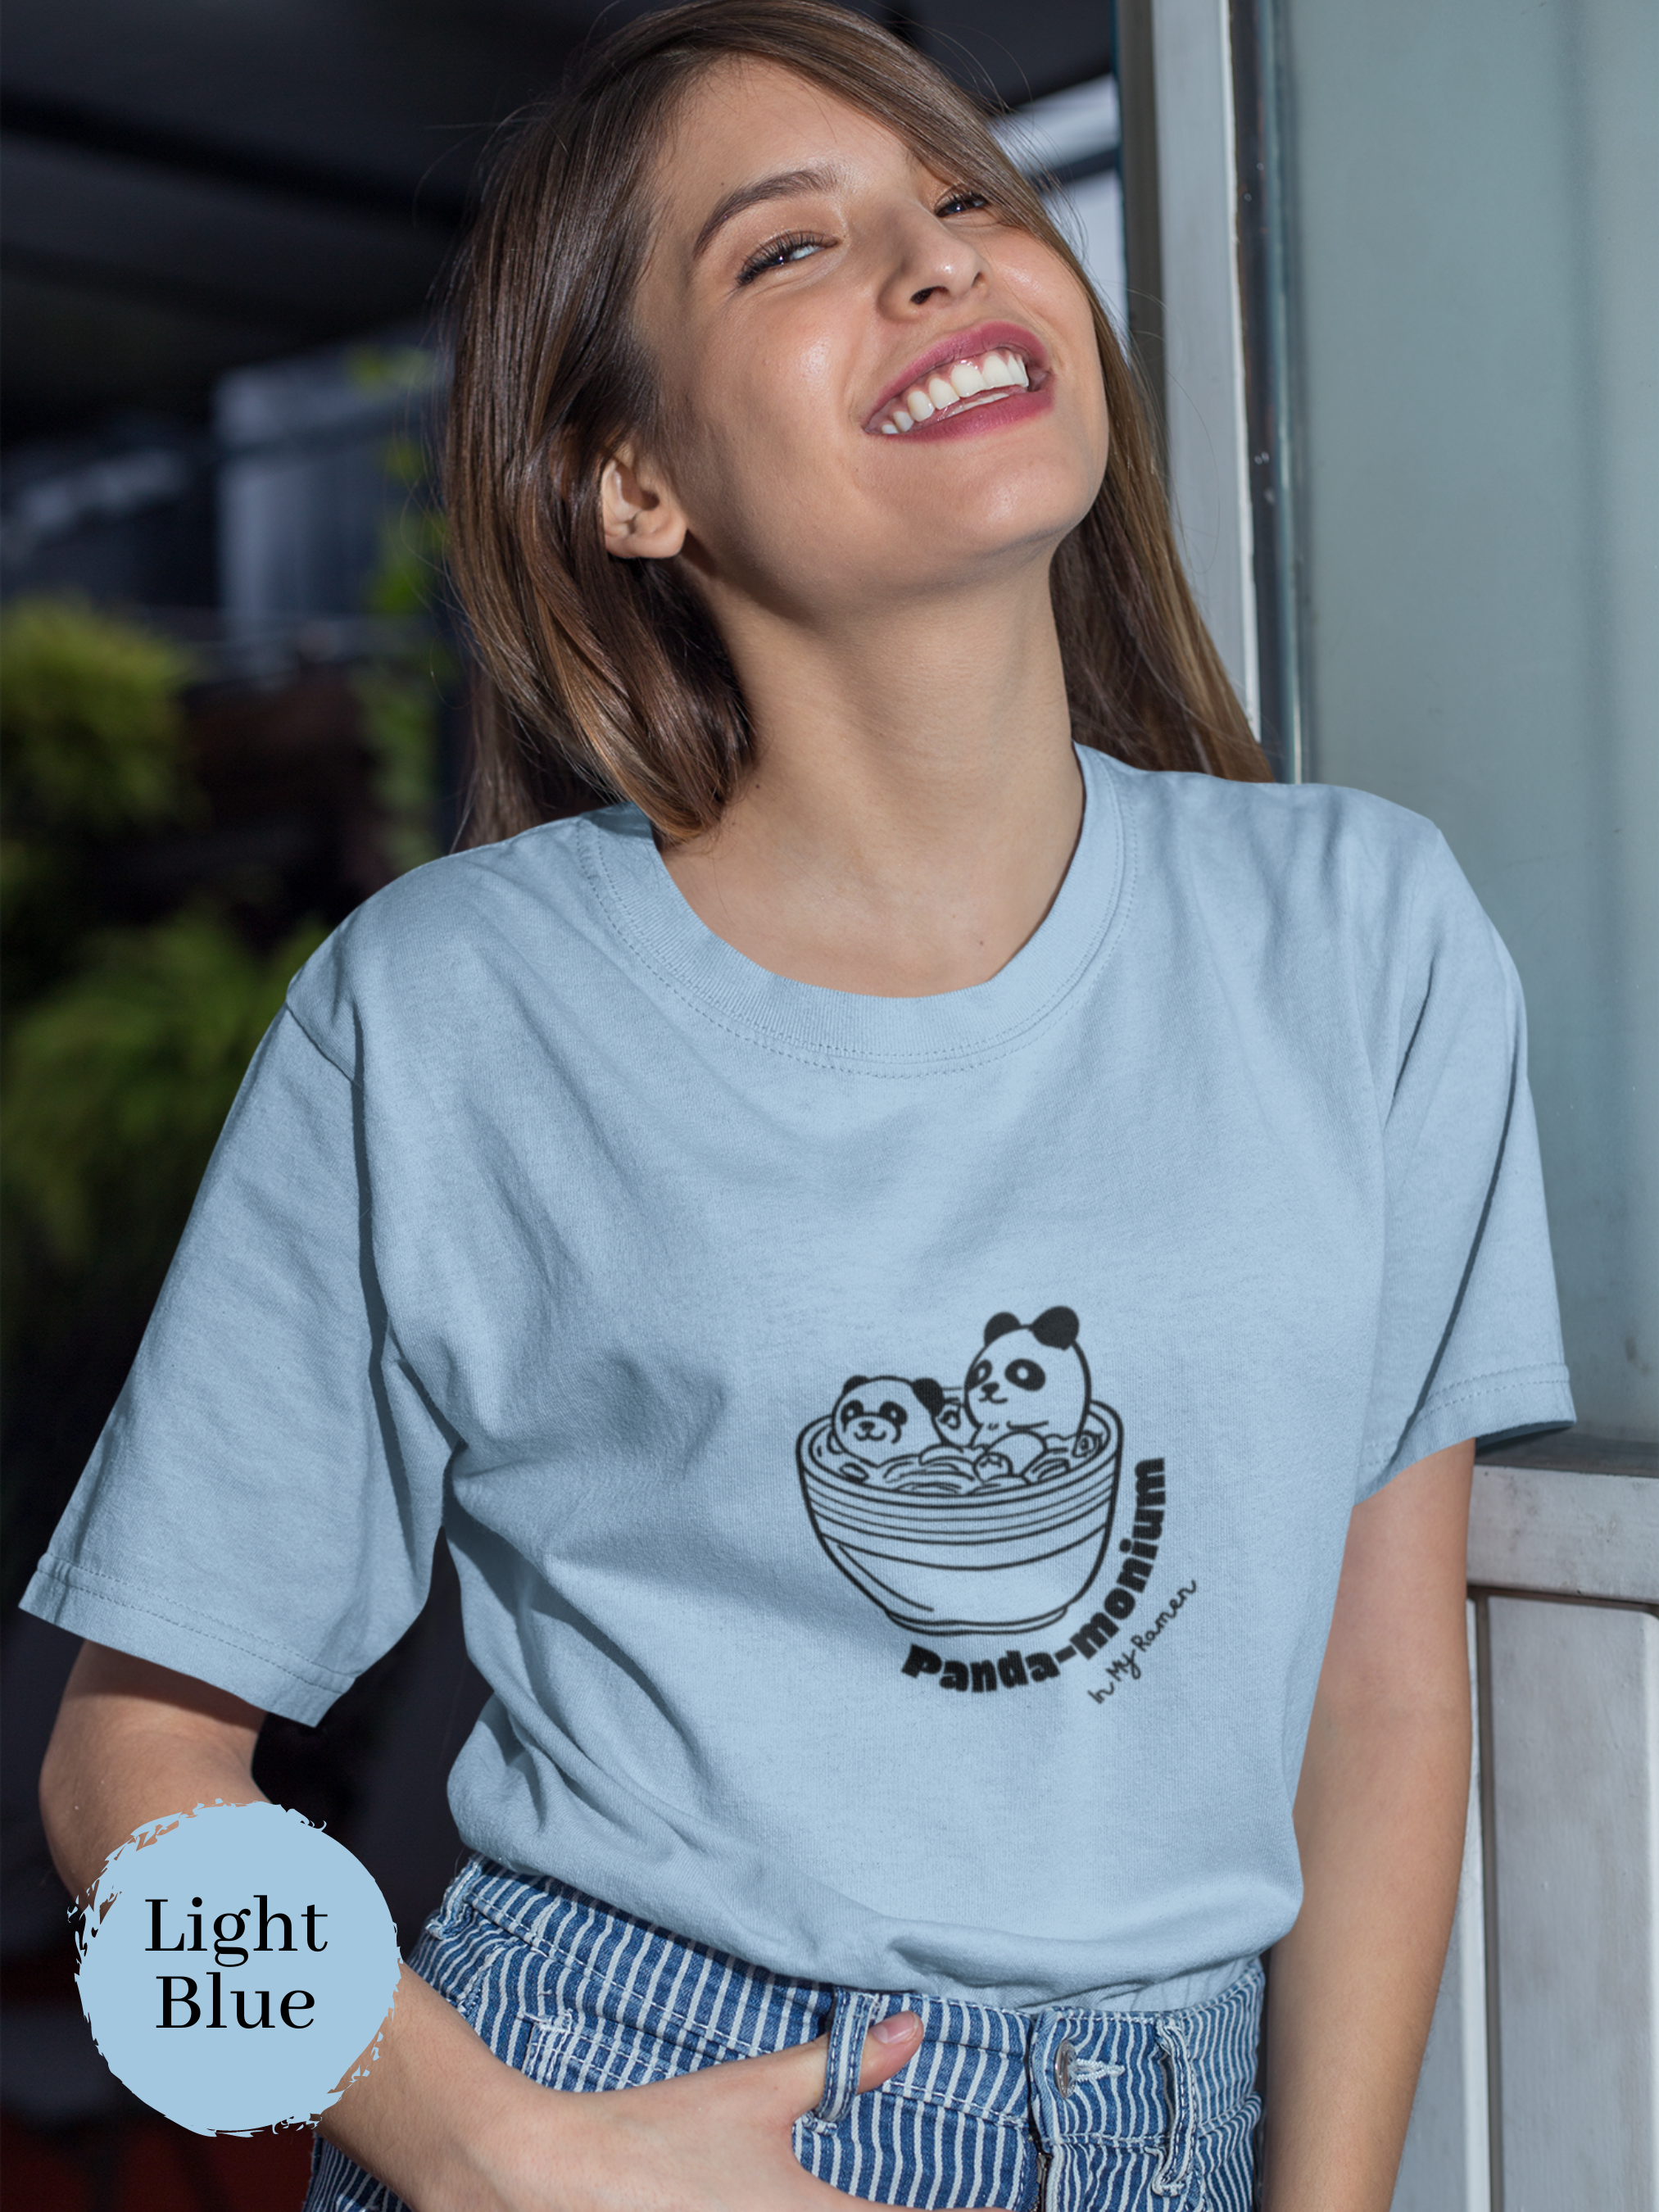 Ramen T-Shirt with Cute Panda Design: Japanese Foodie Shirt with Ramen Art